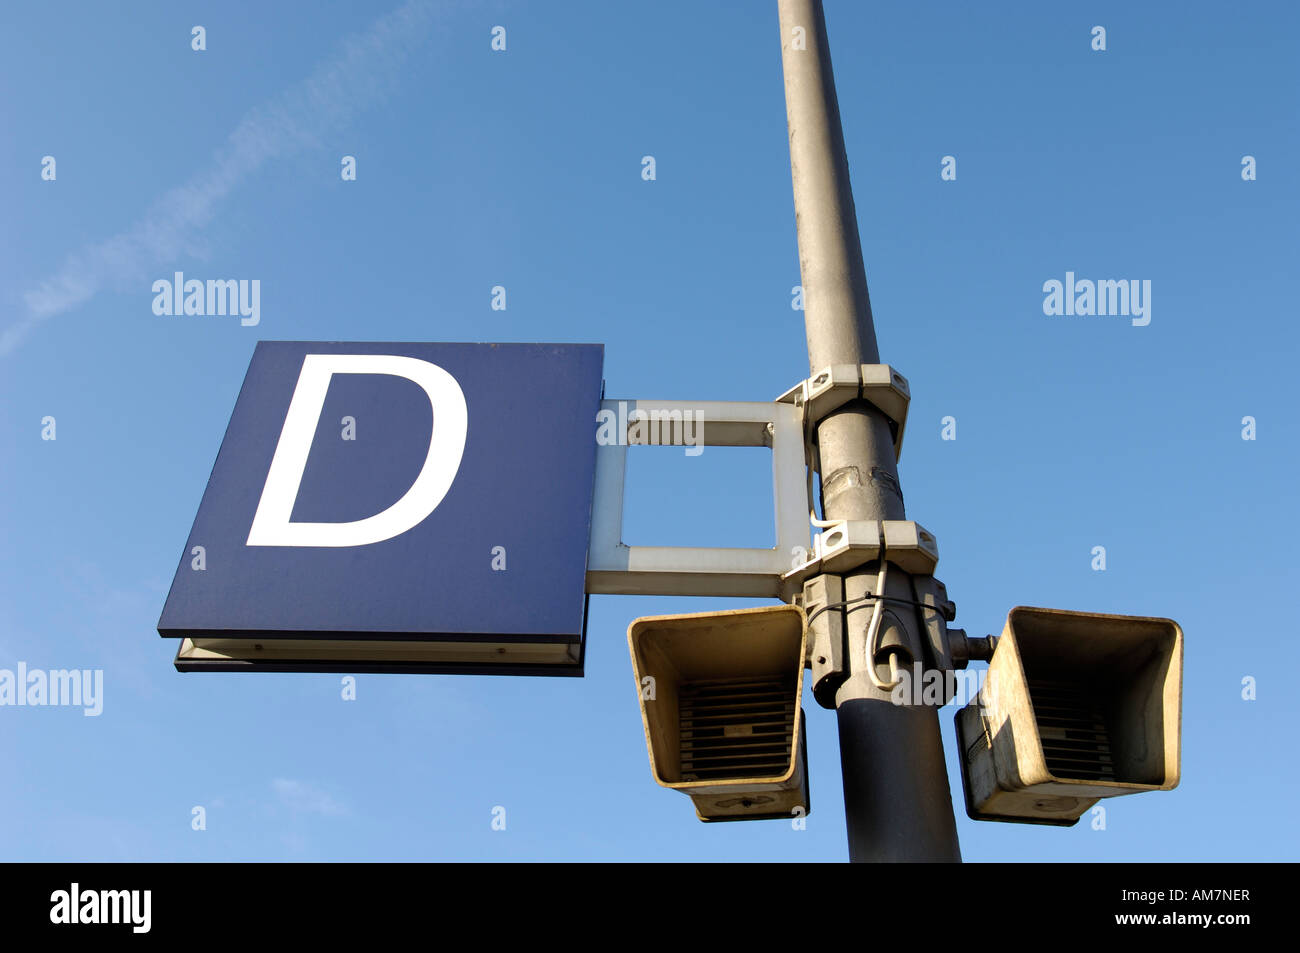 Sign D marking the departure platform section and loudspeakers, Deutsche Bahn, Germany Stock Photo